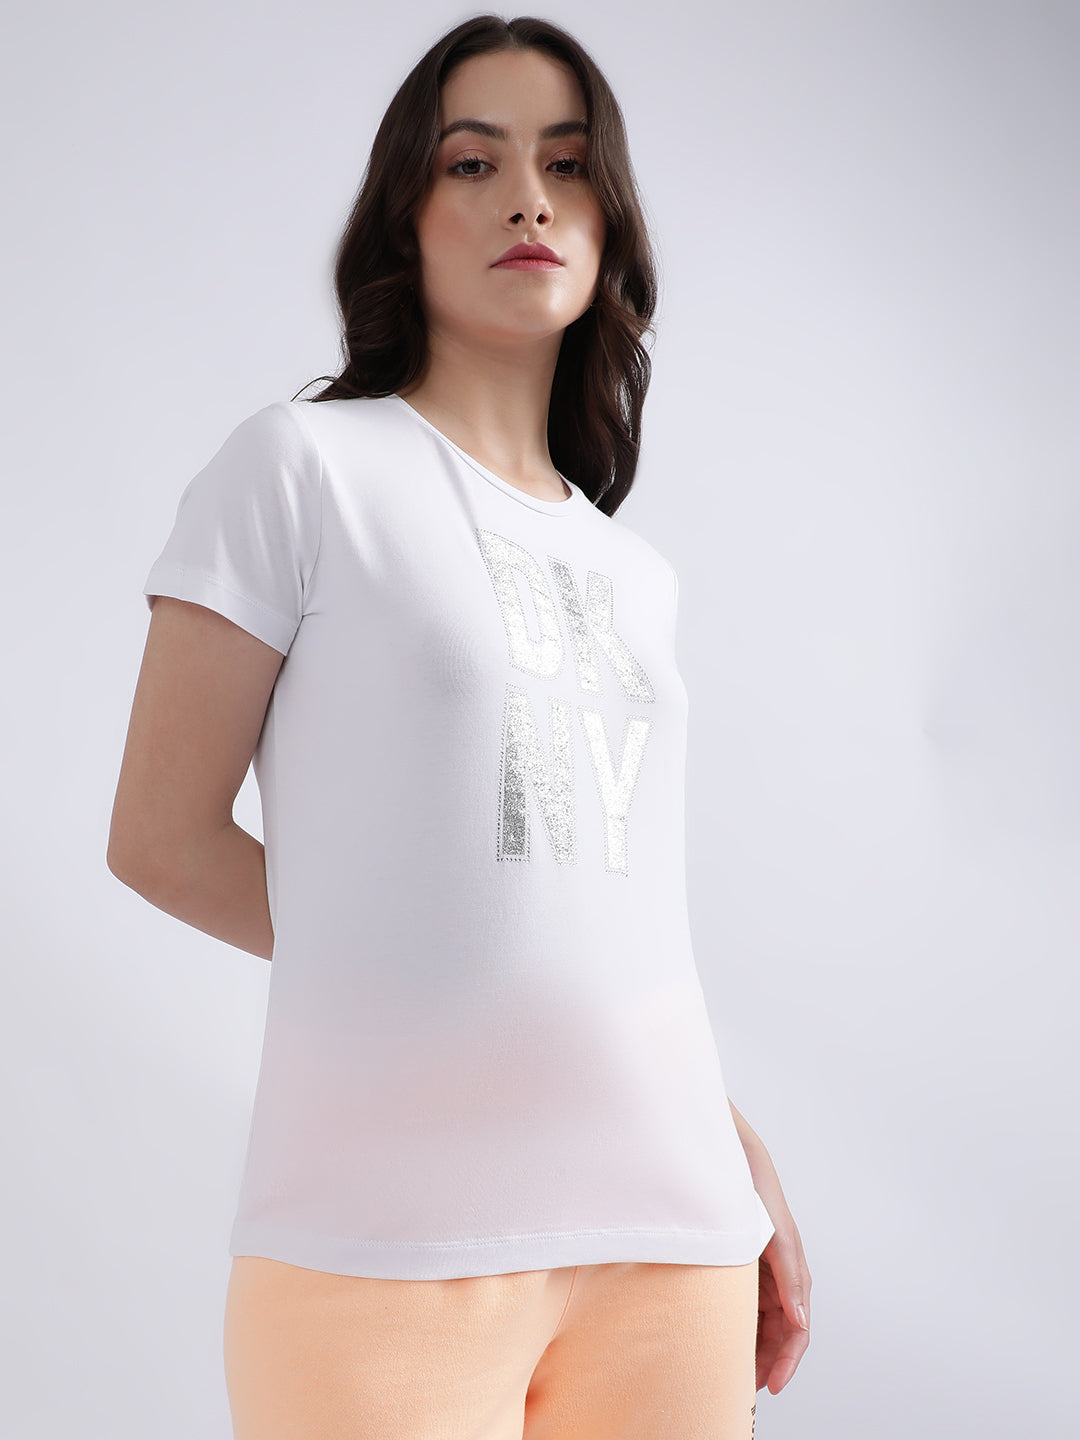 DKNY Women White Printed Round Neck TShirt